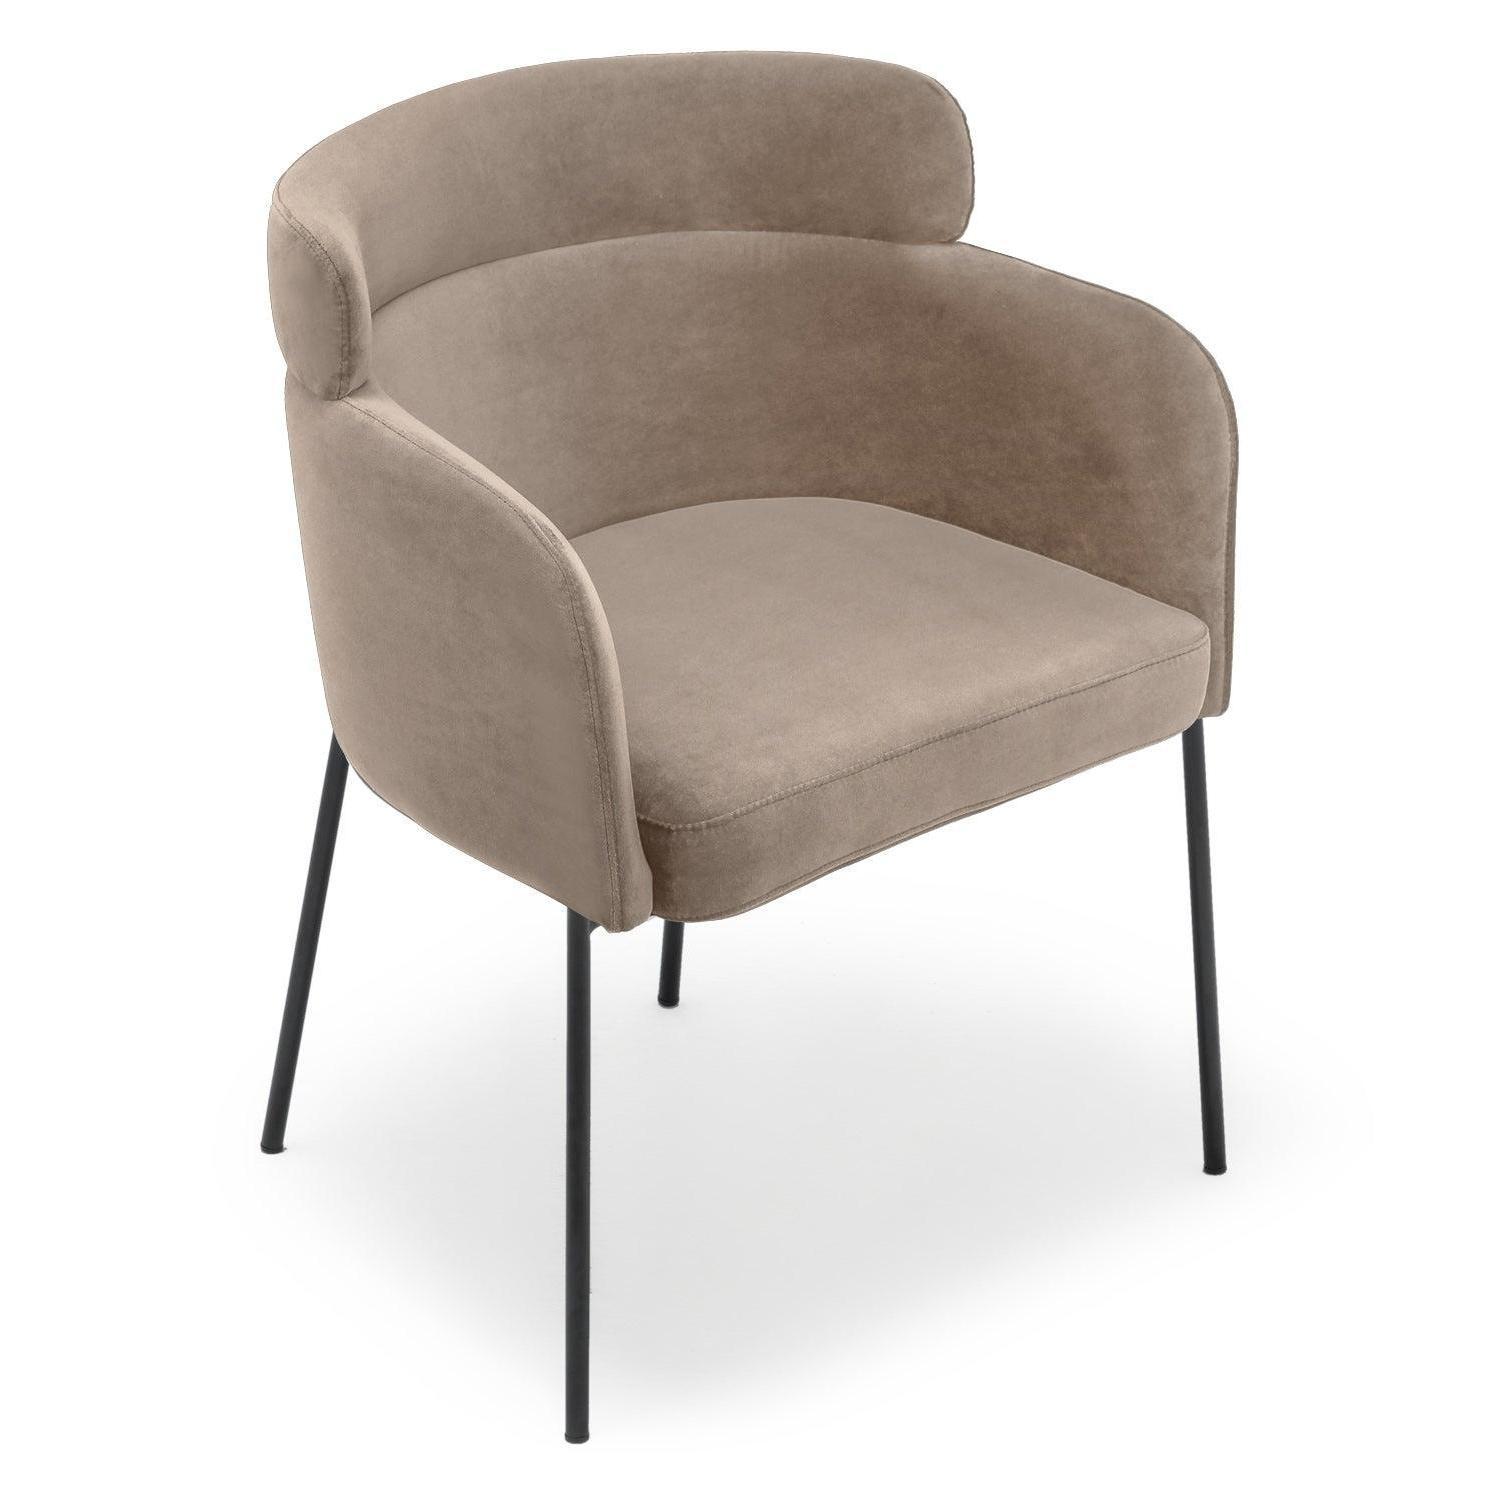 Minimalist Design Leisure Dining Chair